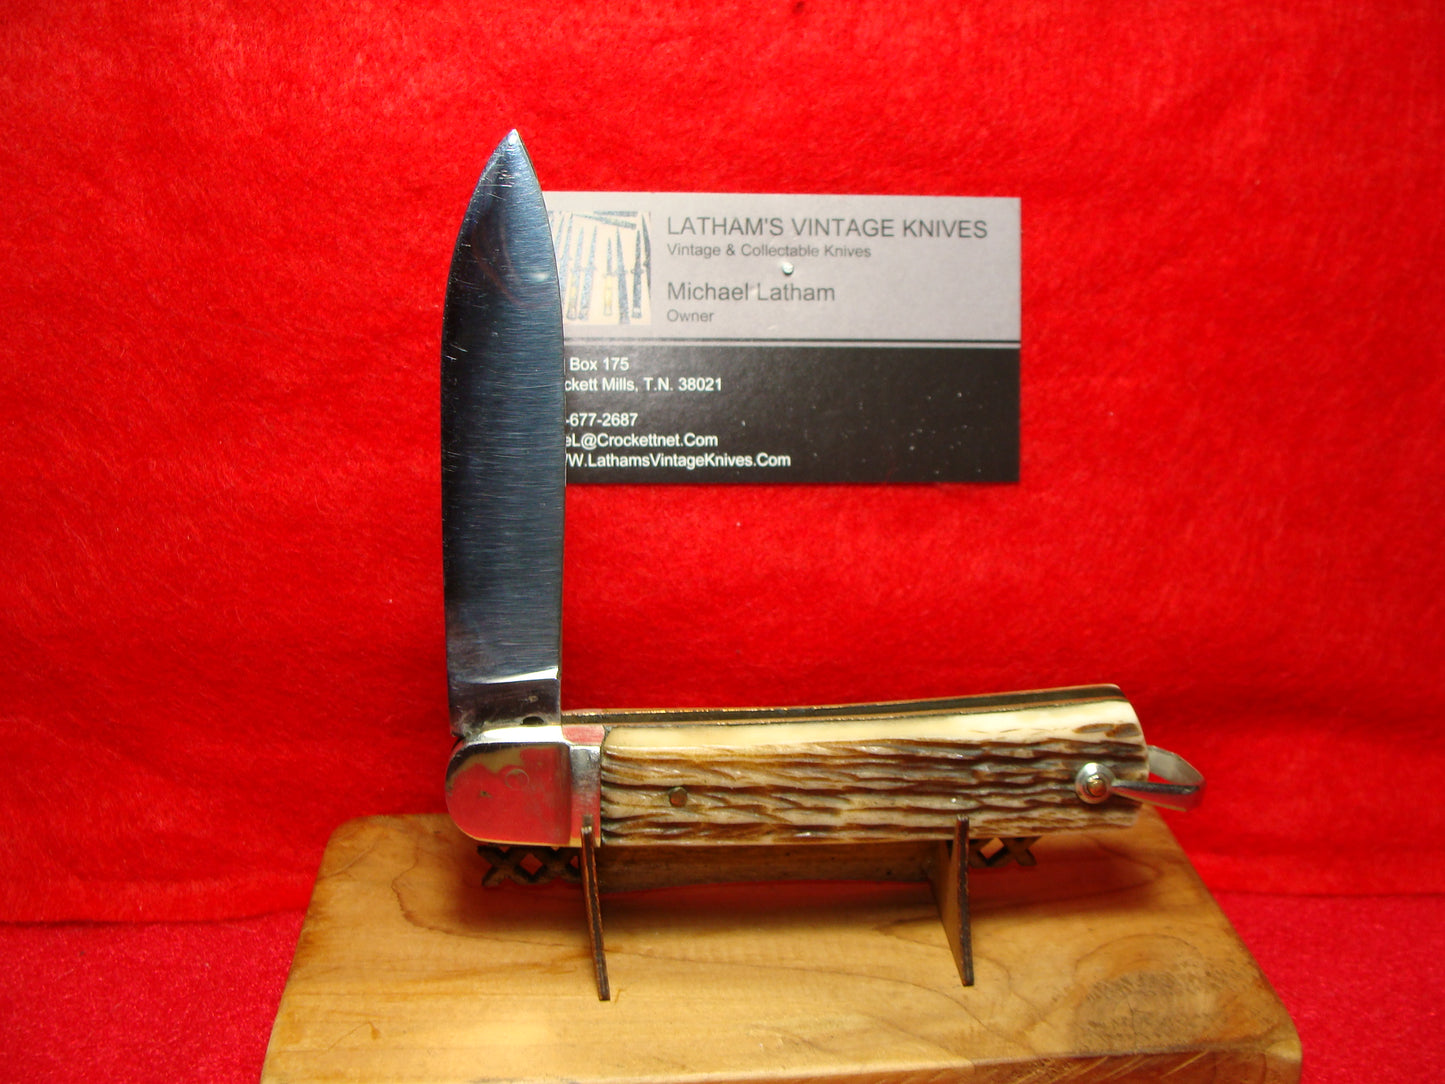 MAKINOX FRENCH 1960-70 LEVER AUTOMATIC FRENCH AUTOMATIC KNIFE JIGGED BONE HANDLES